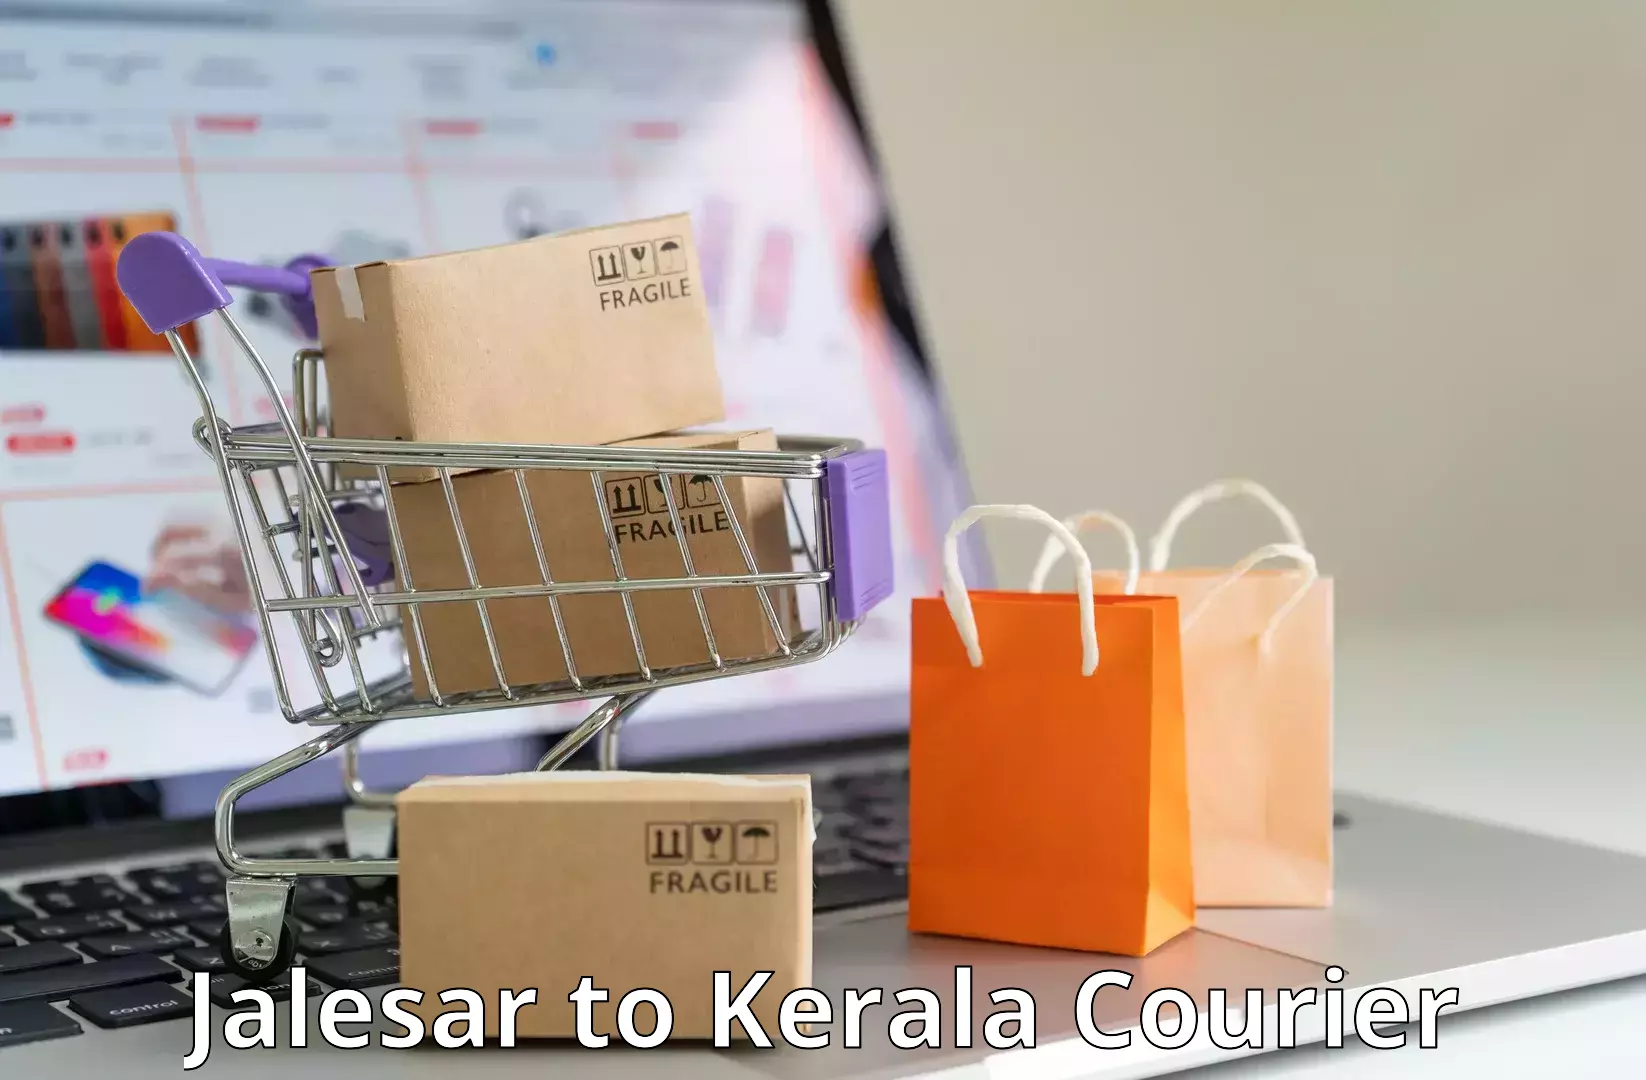 Customer-focused courier Jalesar to Kerala